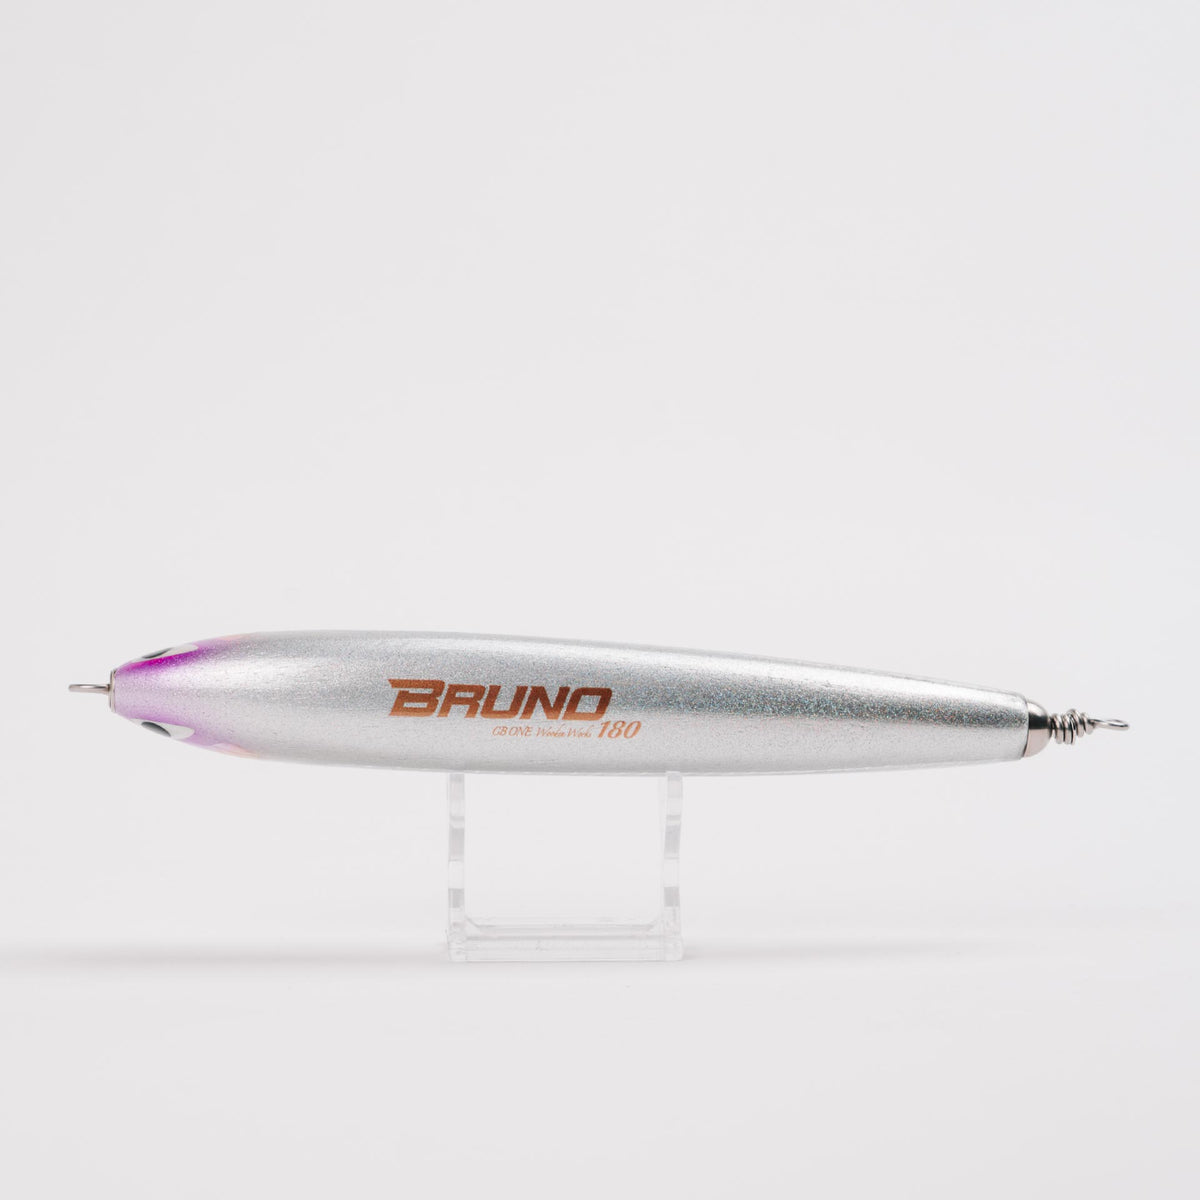 CB One Bruno 180F/61g - Silver